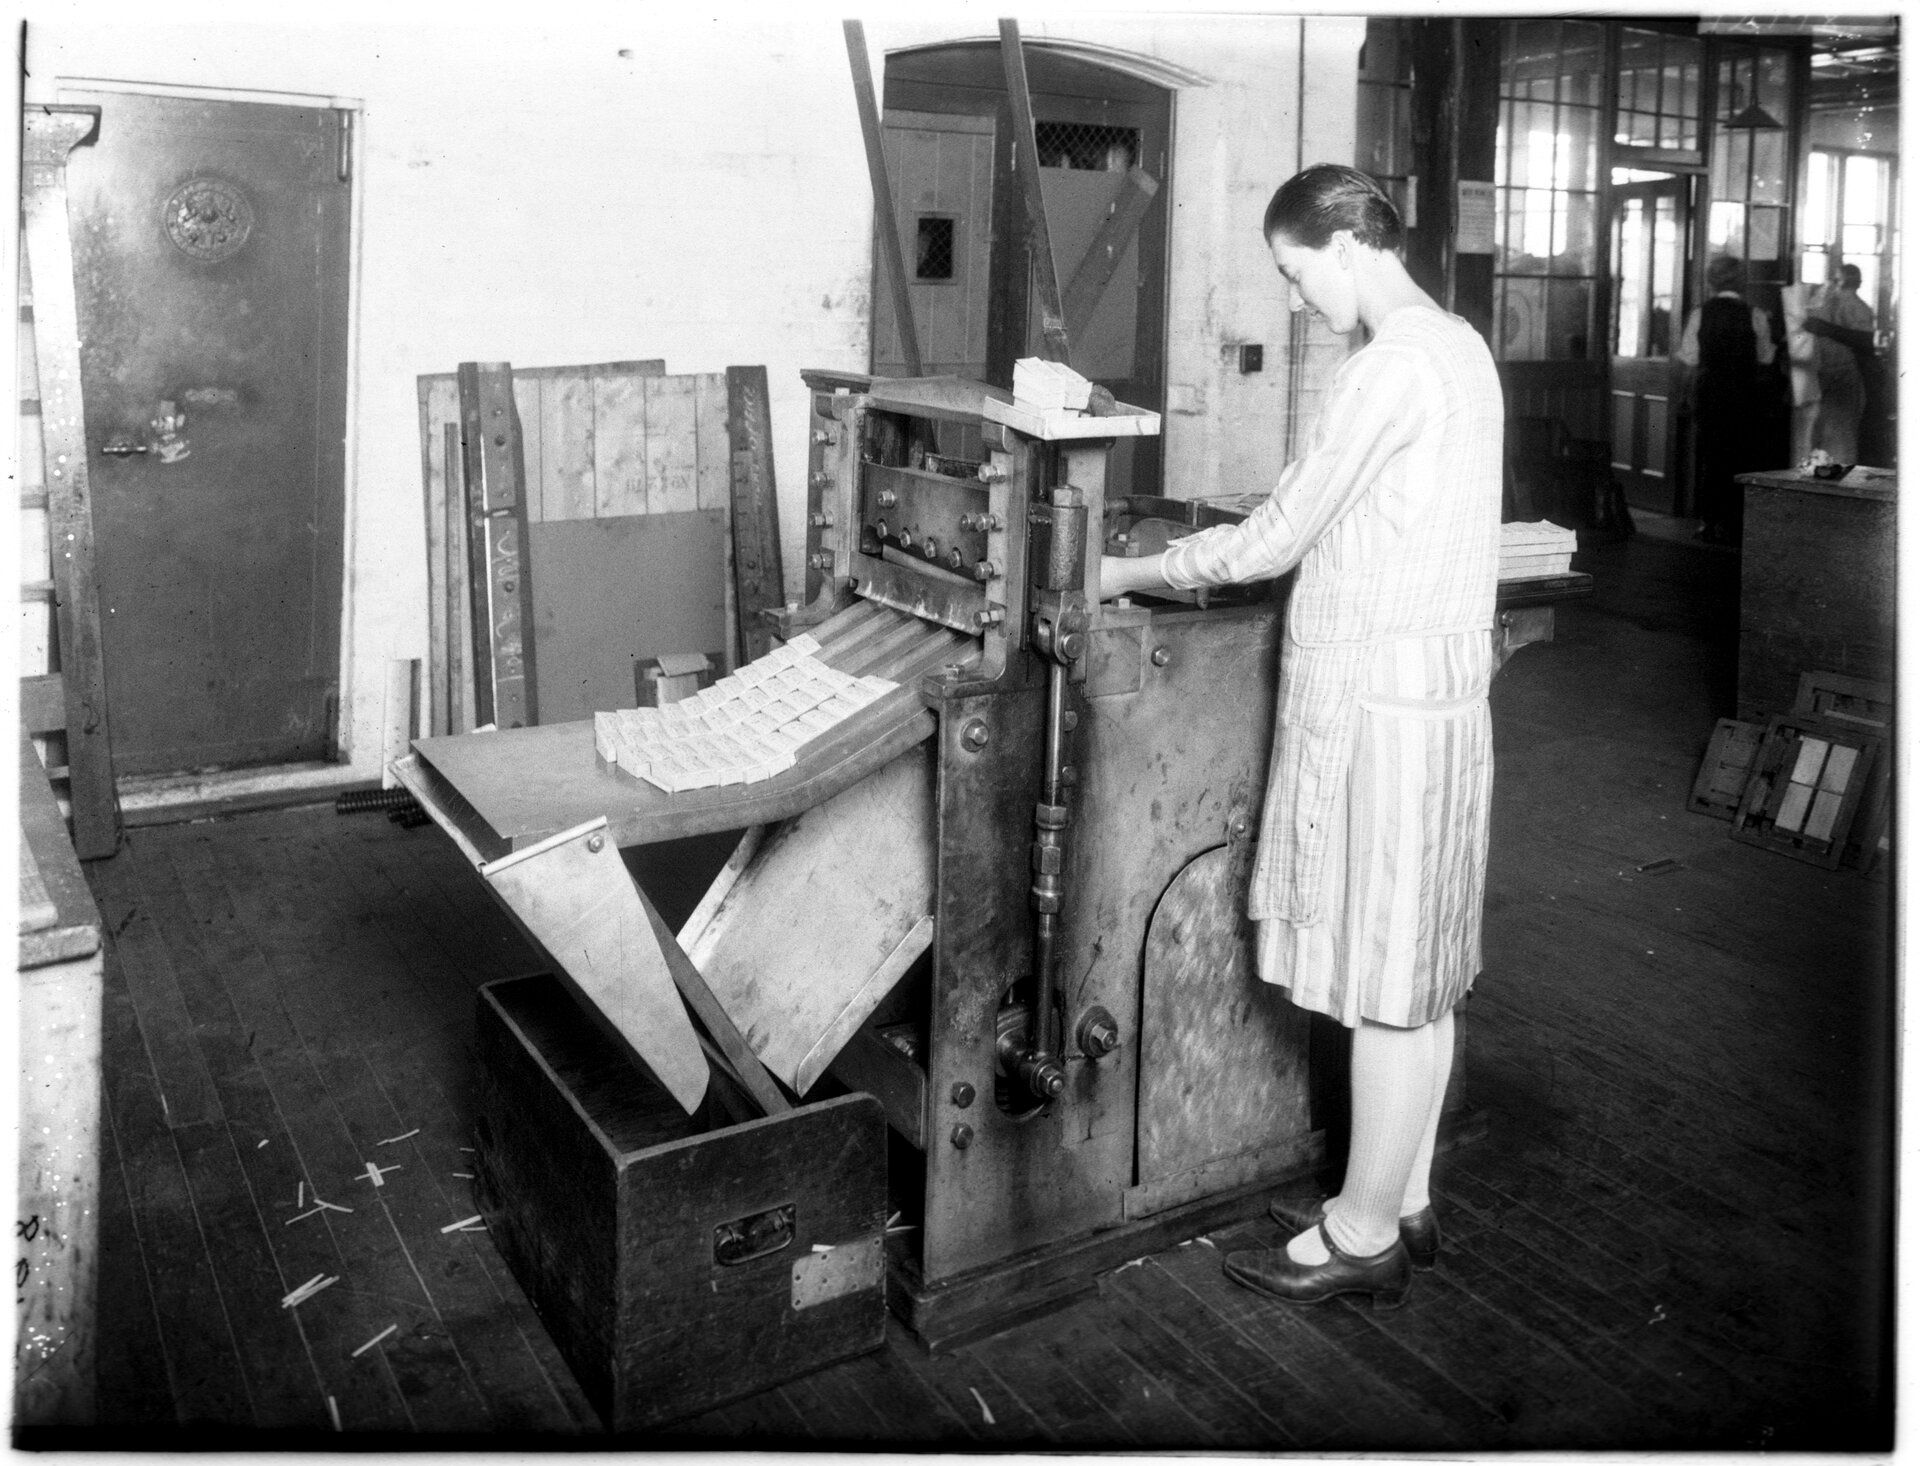 A woman working a machine in a workshop